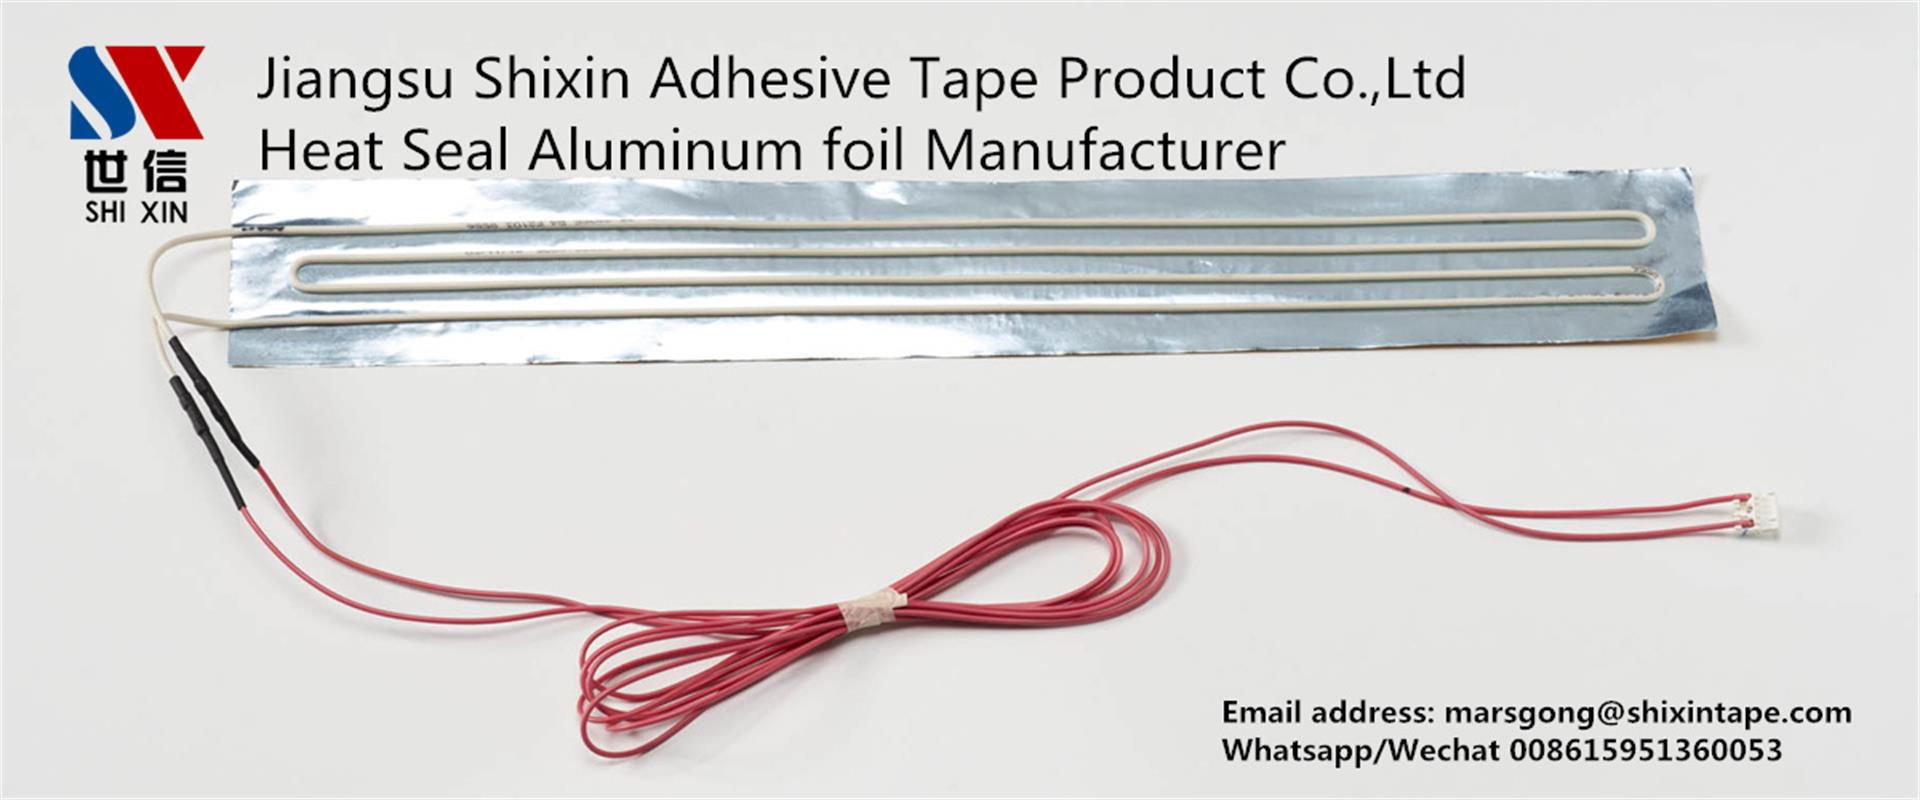 Heat seal aluminum foil tape